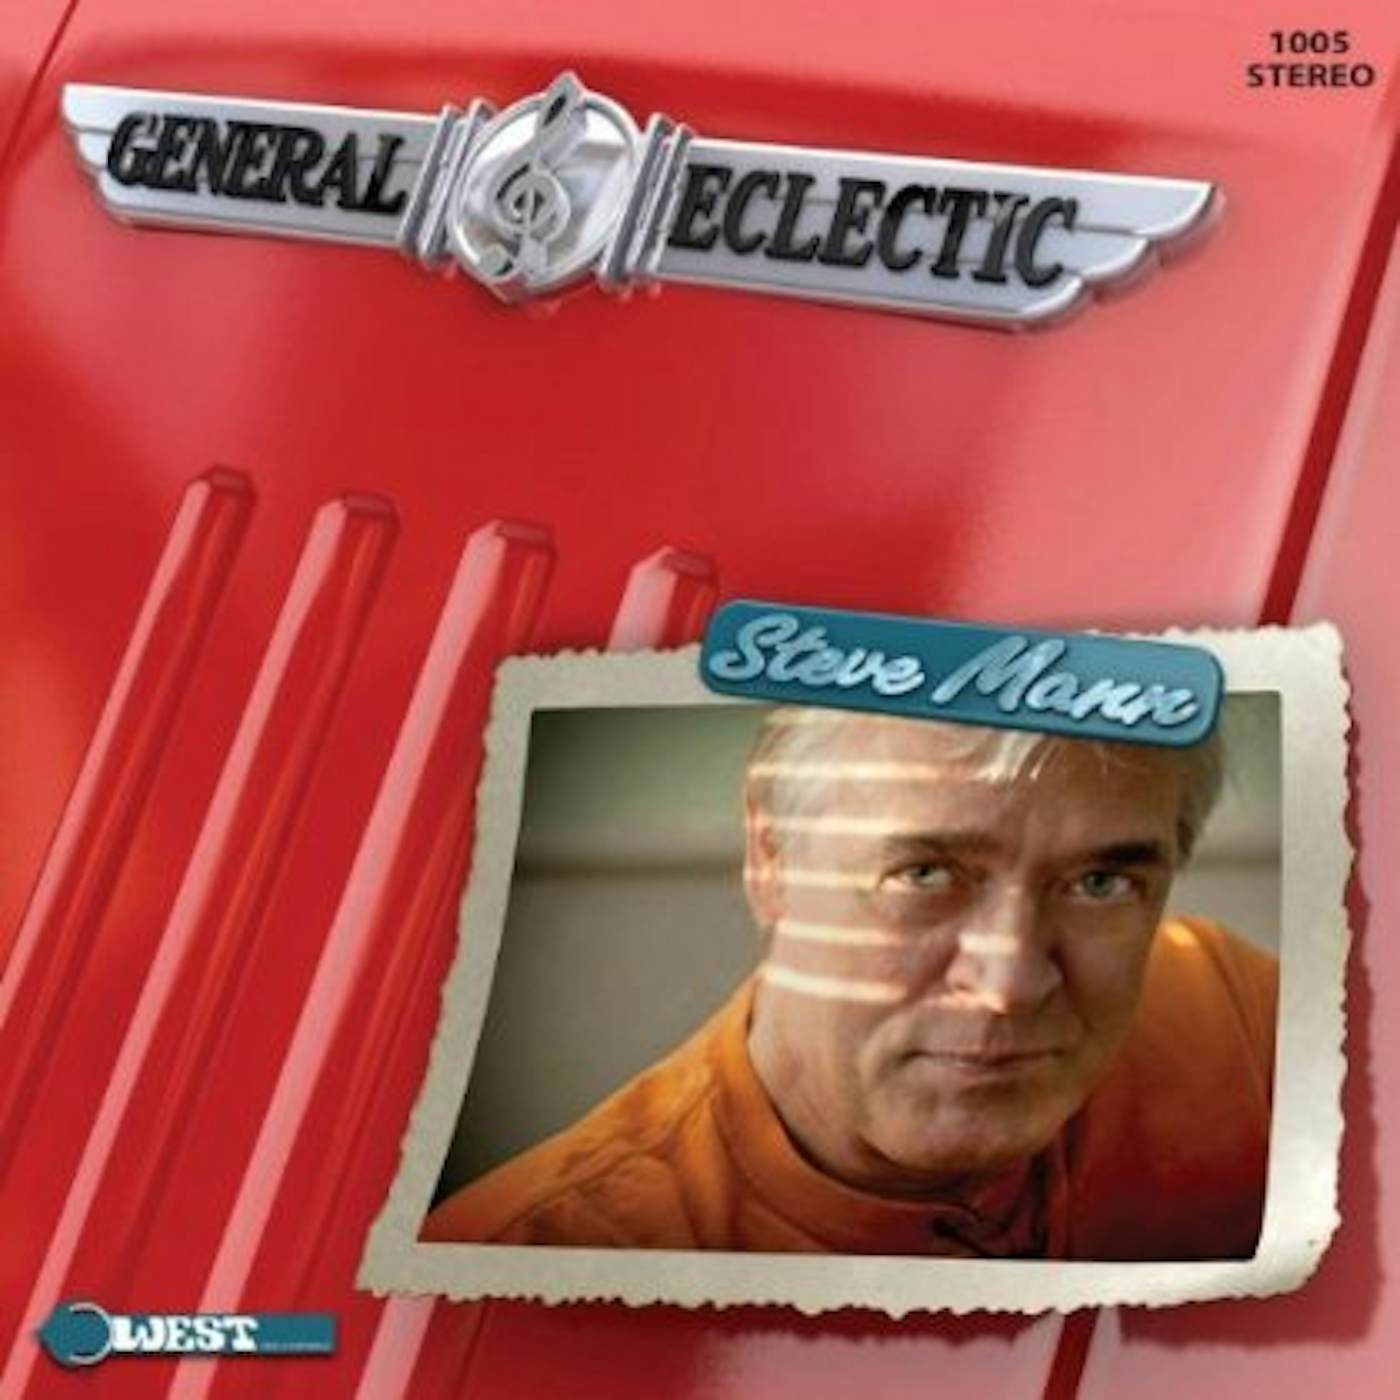 Steve Mann GENERAL ECLECTIC CD